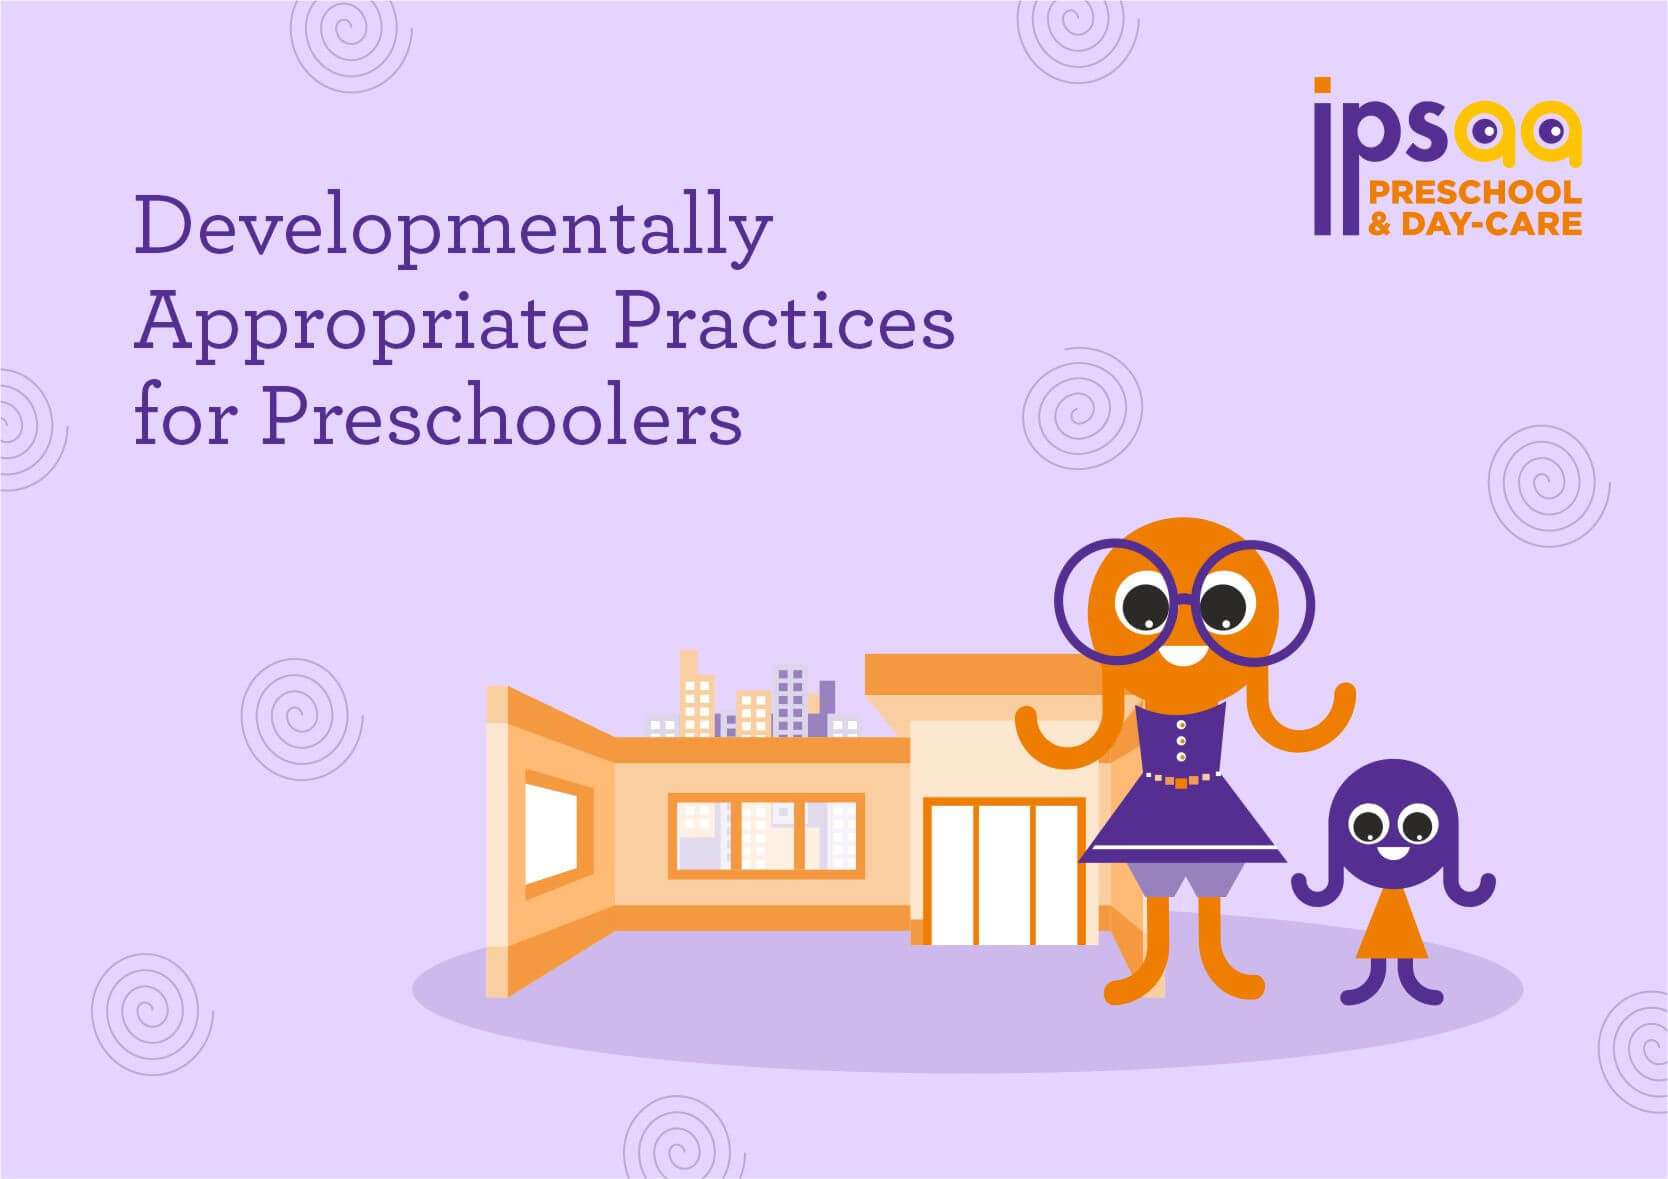 Developmentally Appropriate Practices for Preschoolers